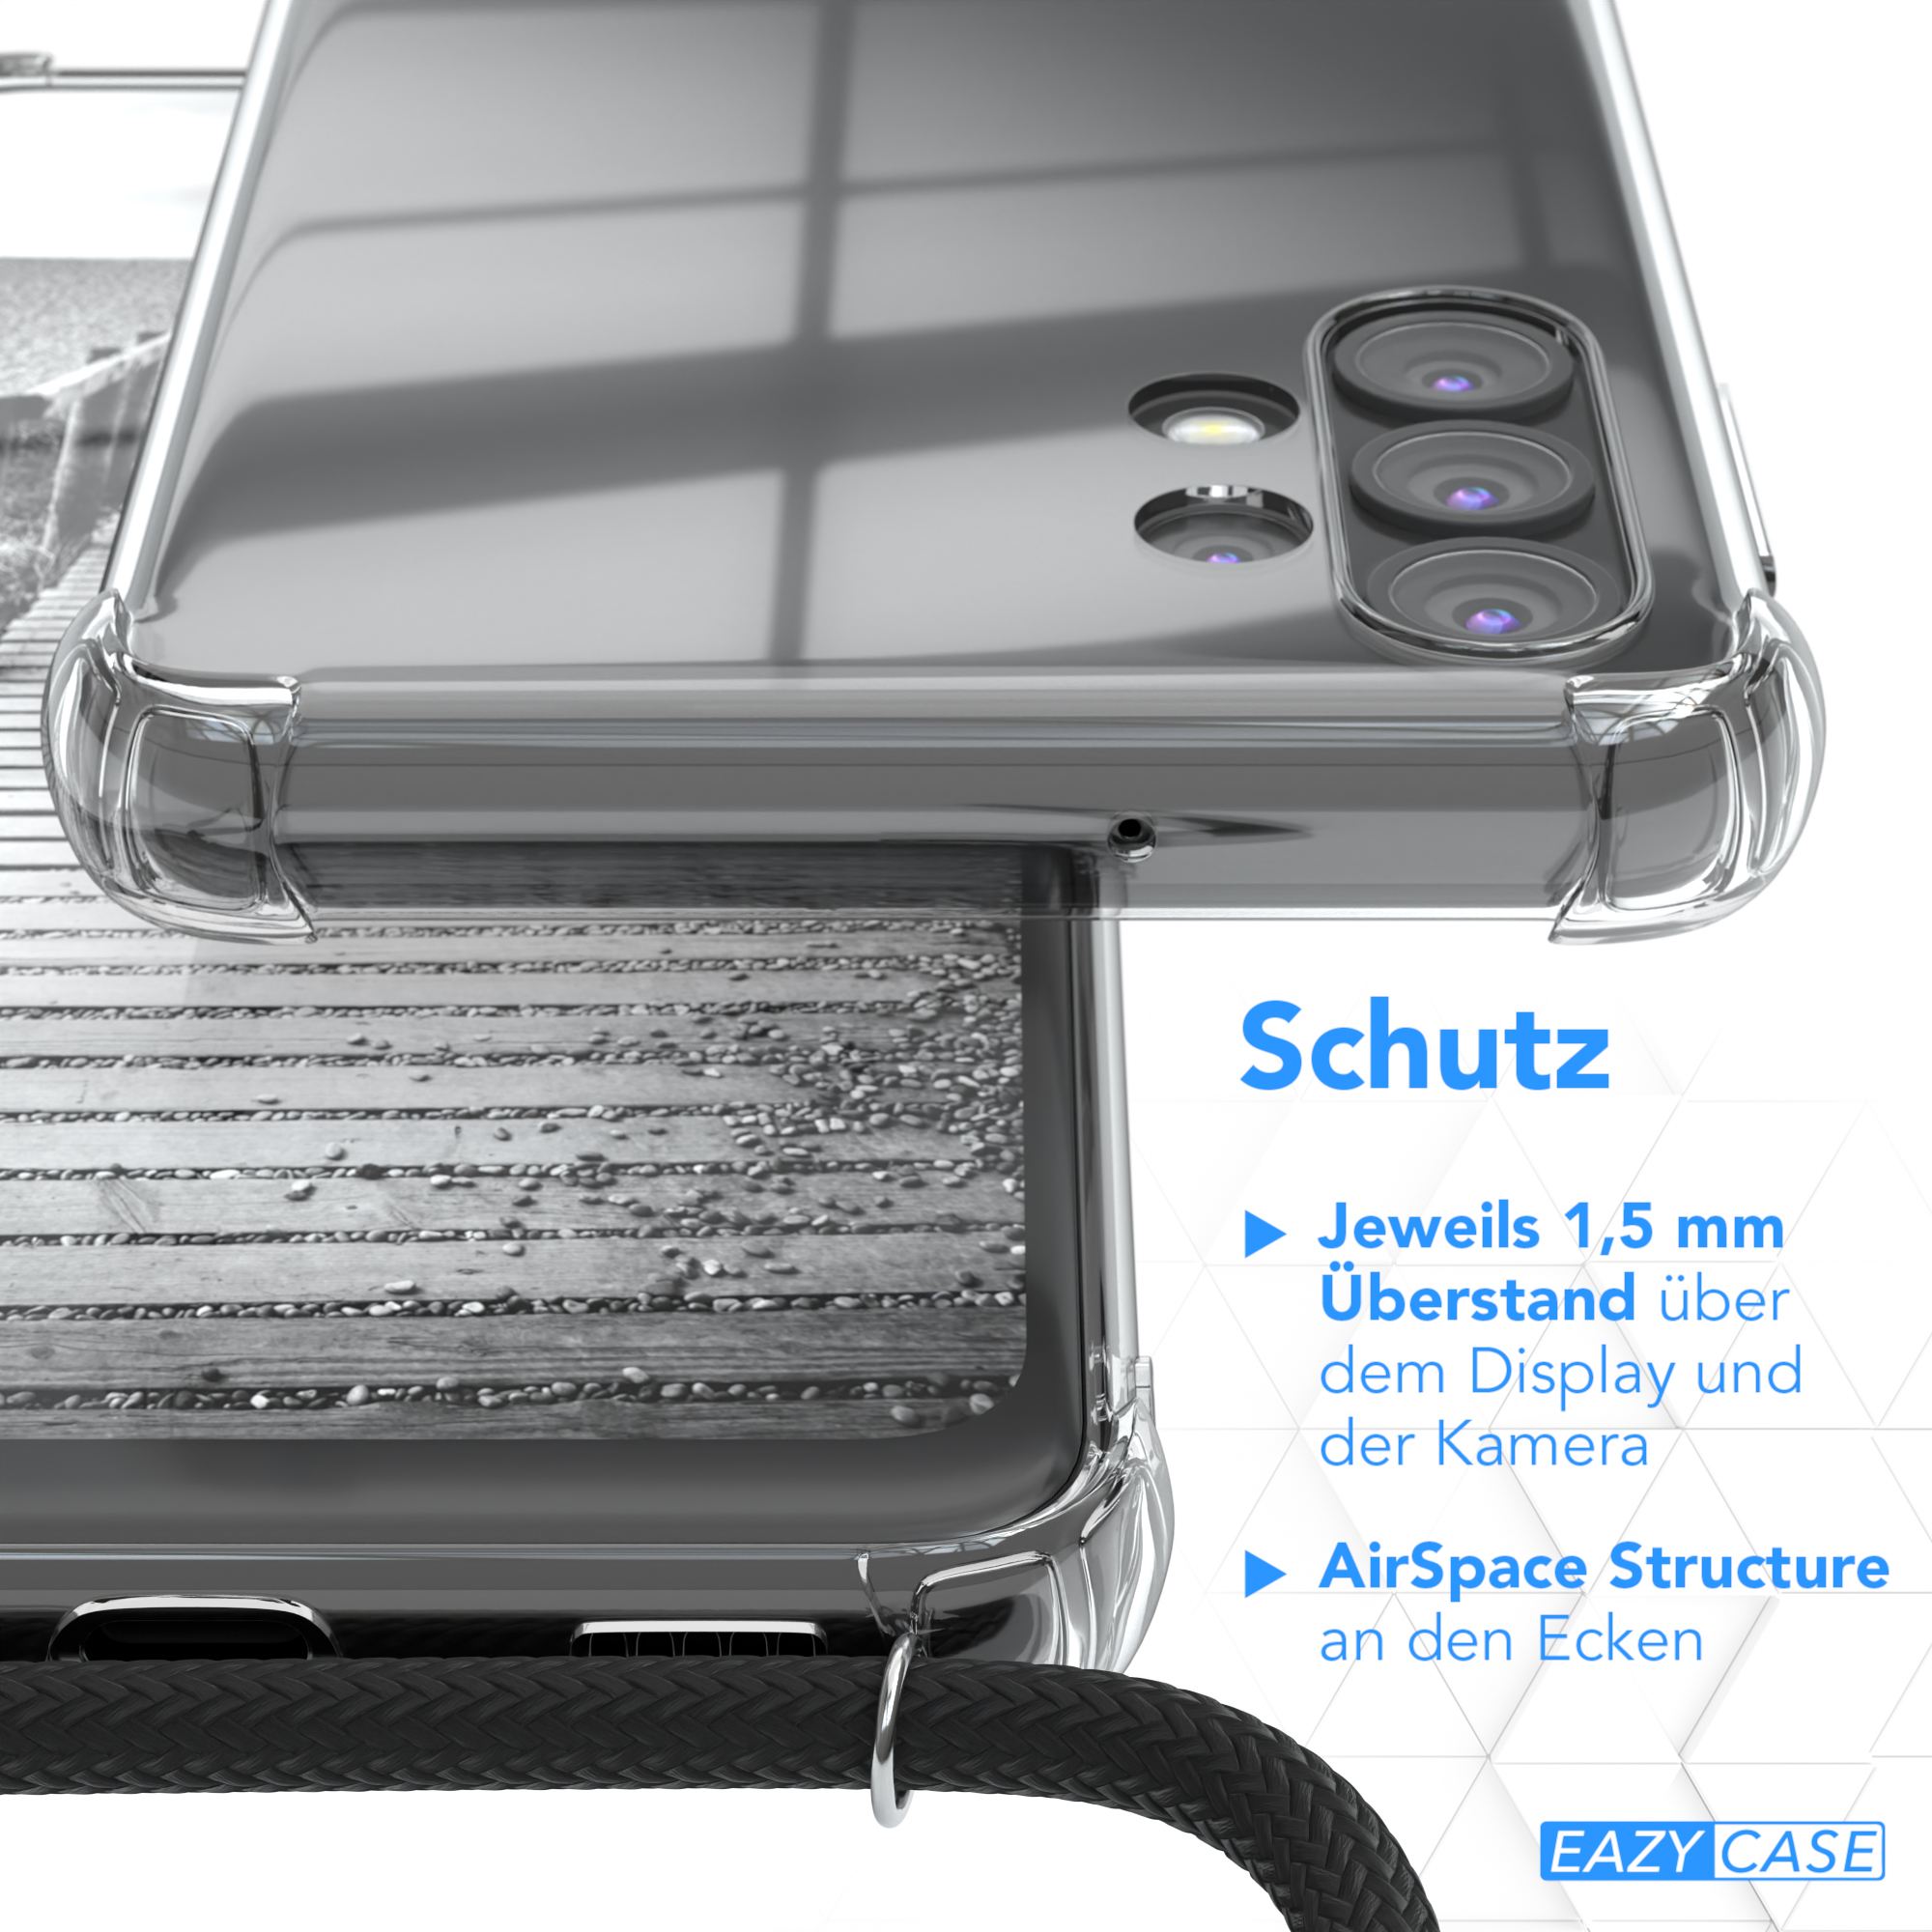 Metall extra Galaxy A32 Kordel CASE Gold EAZY Handykette Umhängetasche, + 5G, Samsung, Schwarz,